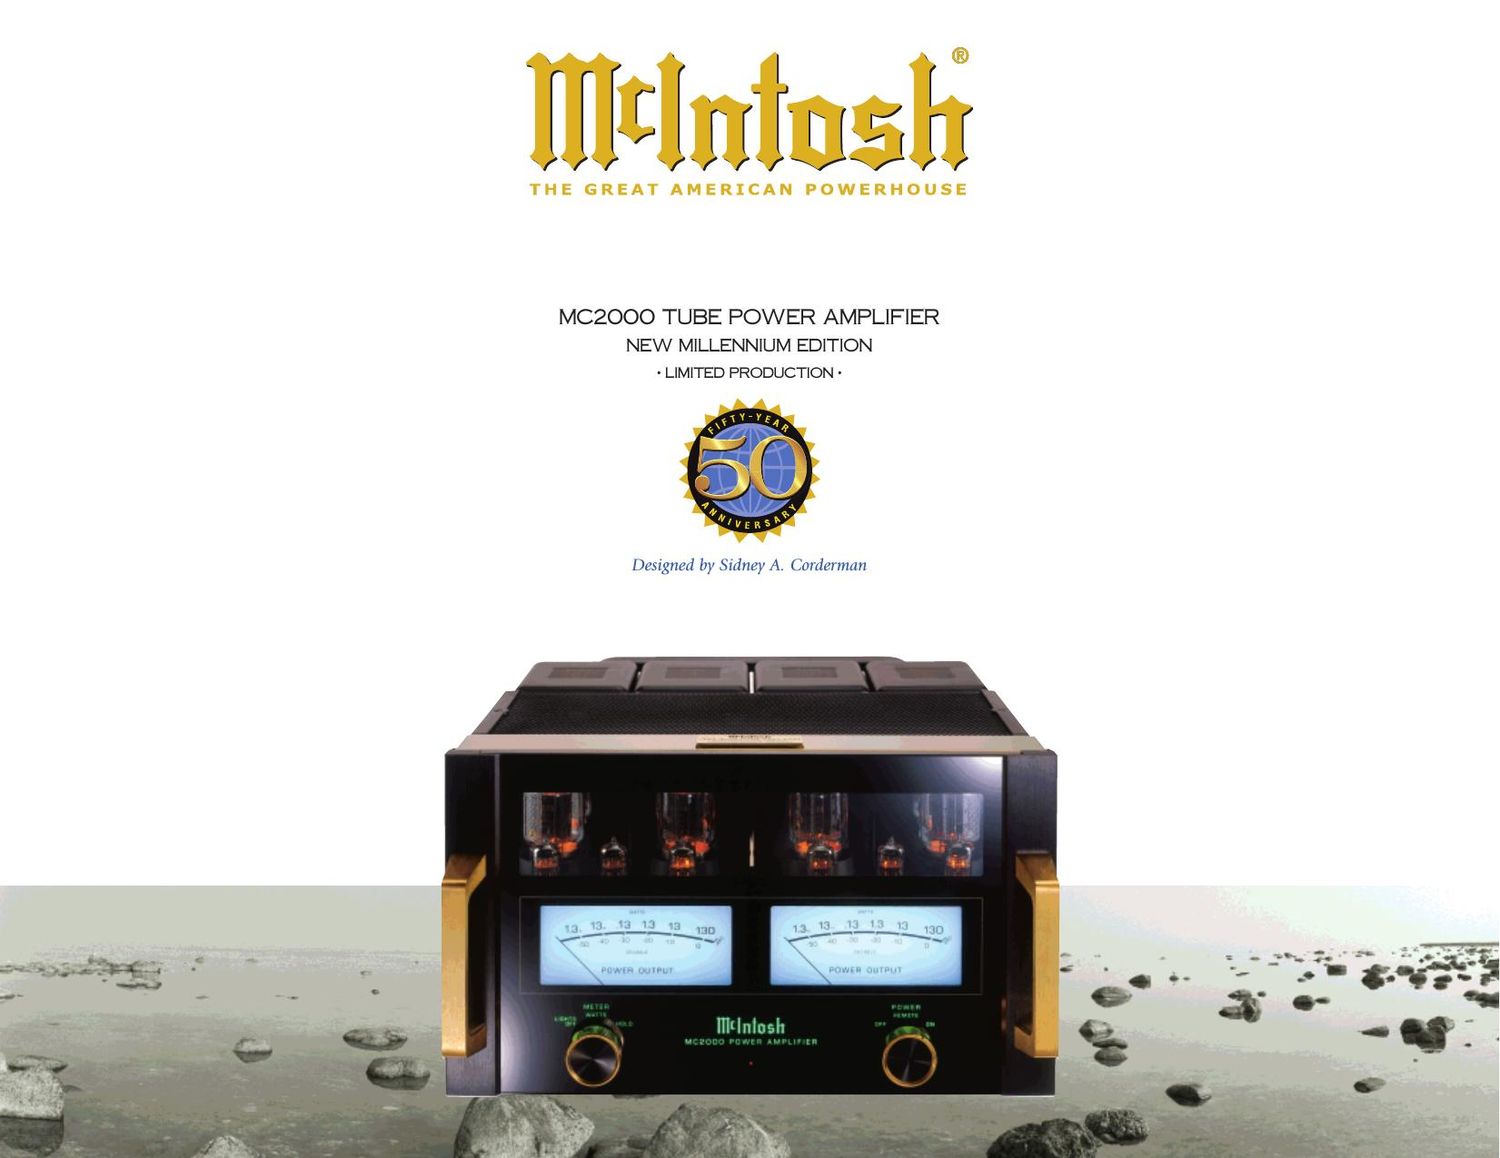 McIntosh MC 2000 Brochure